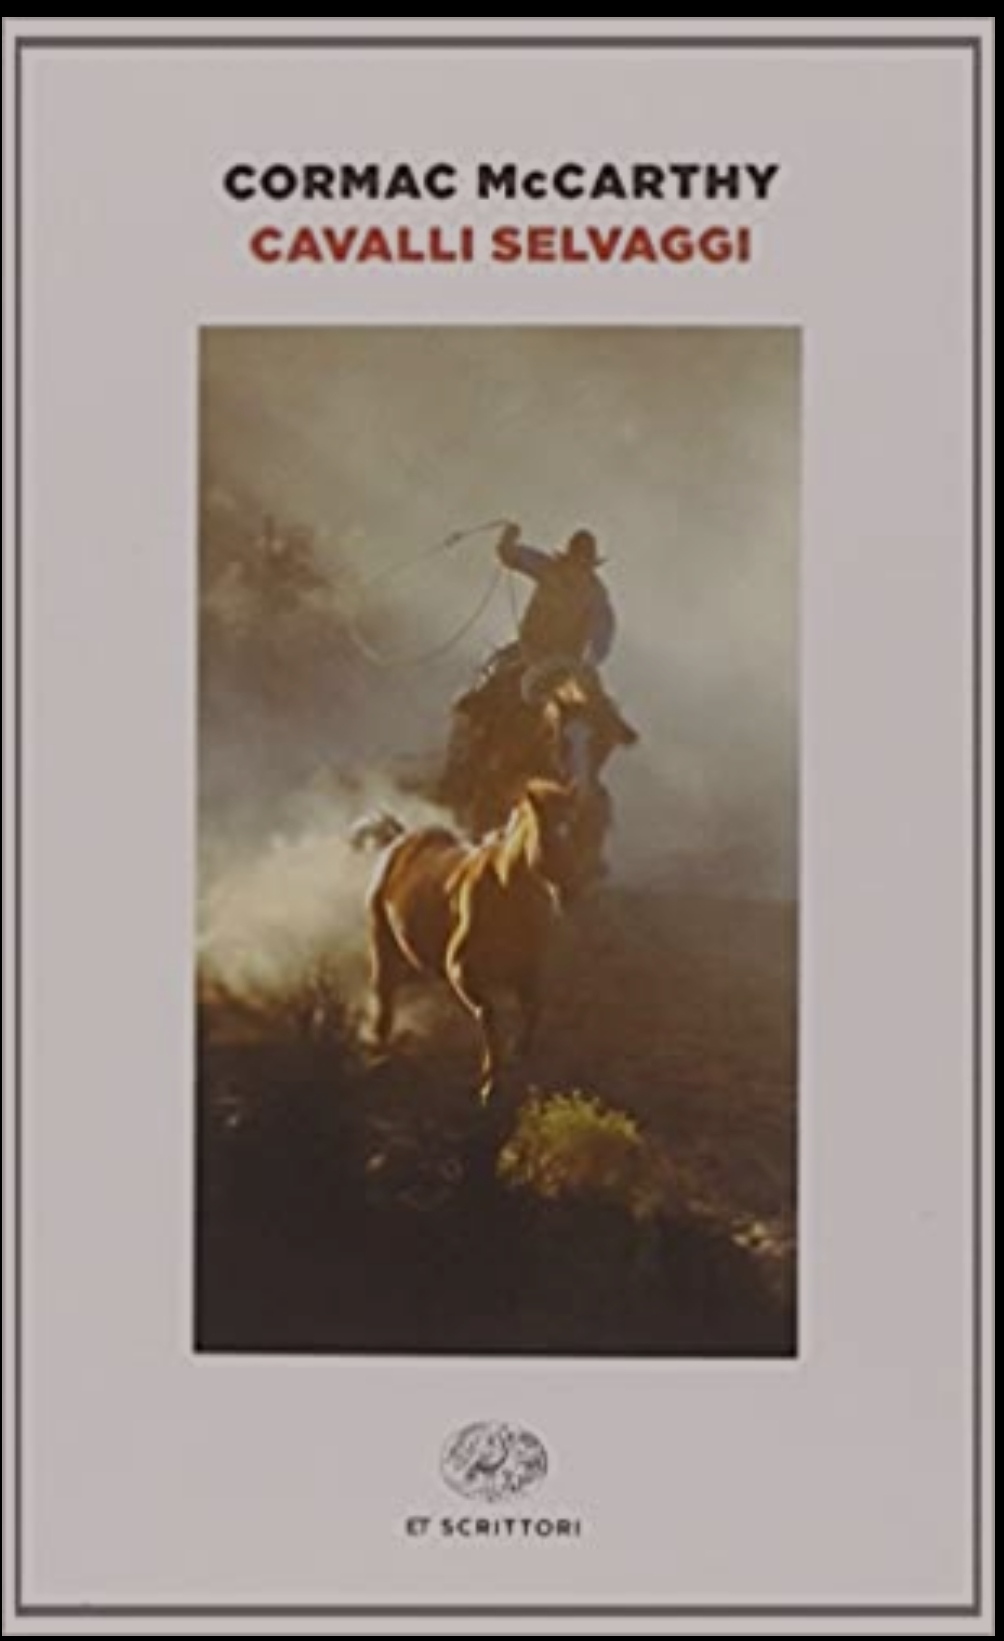 Cavalli selvaggi (EBook, Italiano language, Einaudi)